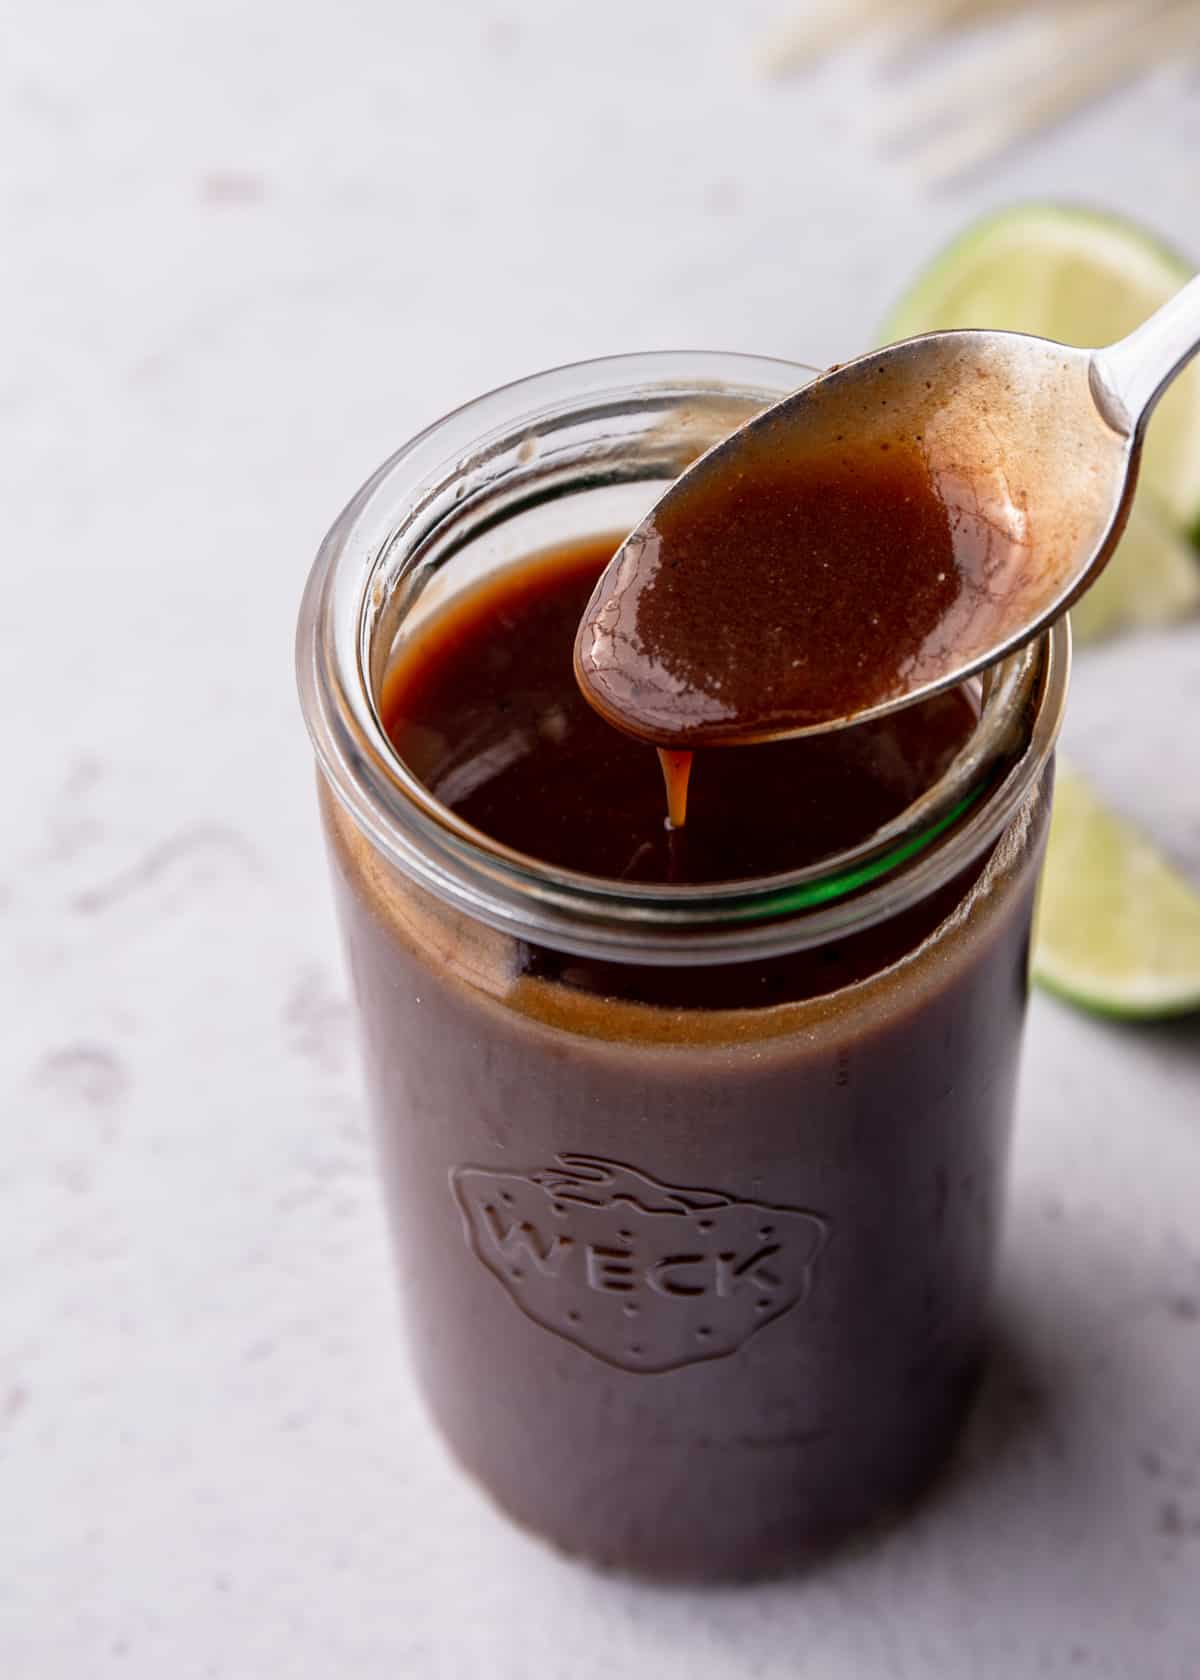 a spoon dipped in a jar of pad thai tamarind sauce